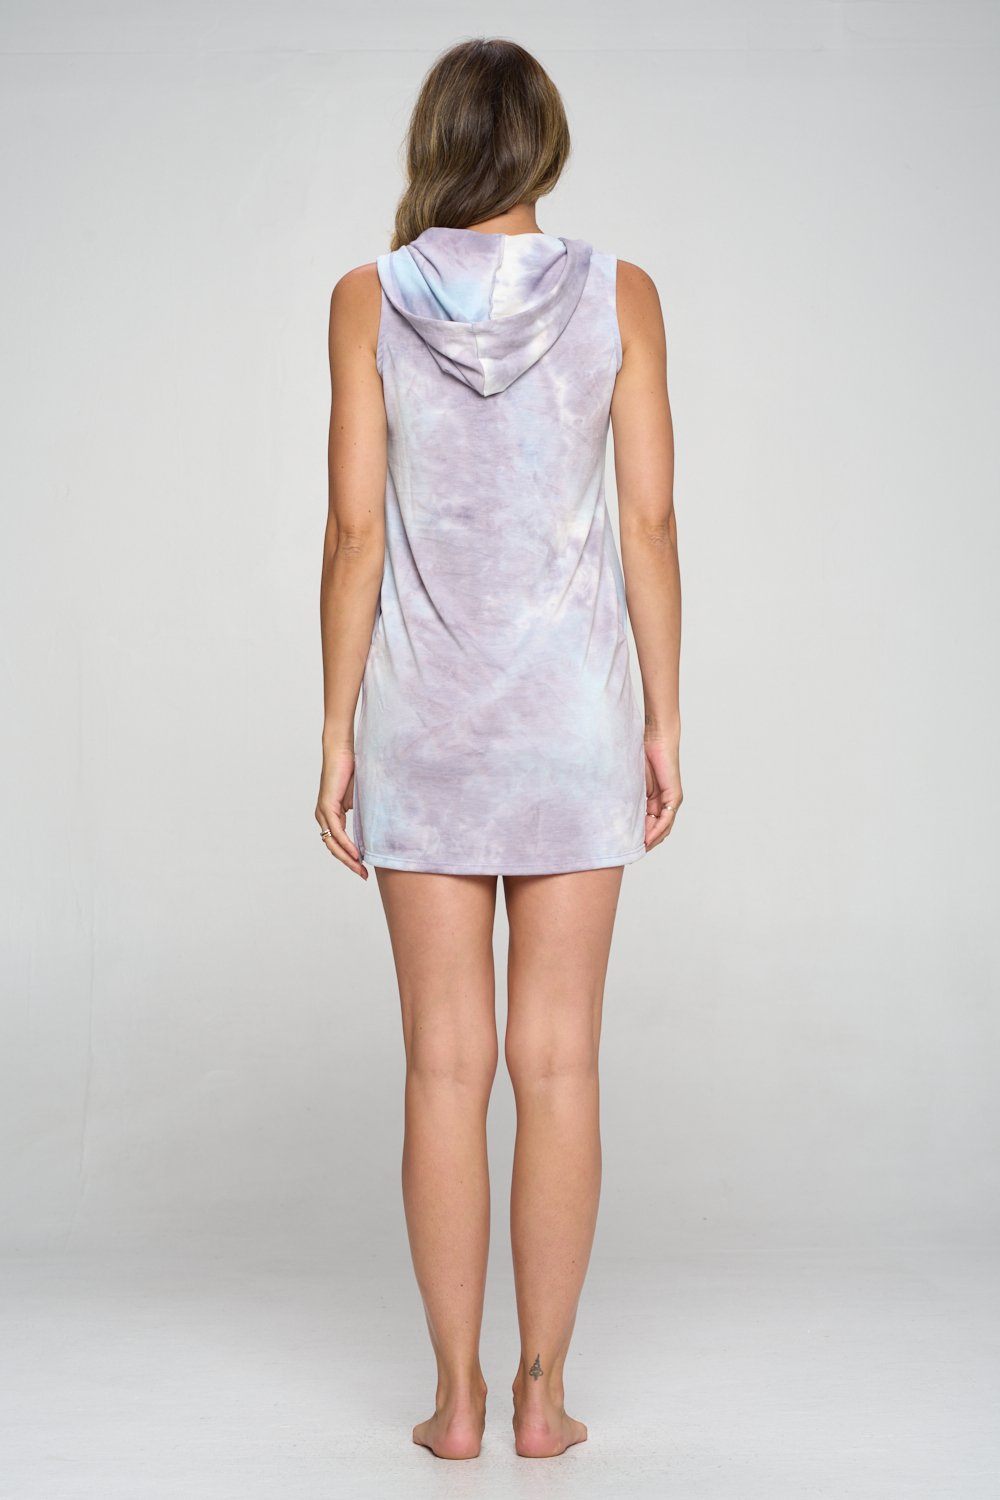 Athena - Summer Sky Tank Dress w Hood by EVCR